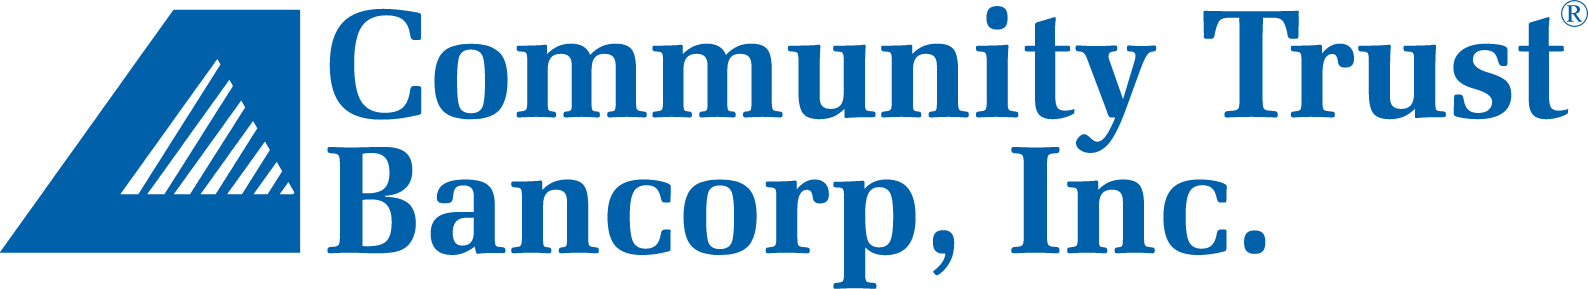 Community Trust Bancorp logo large (transparent PNG)